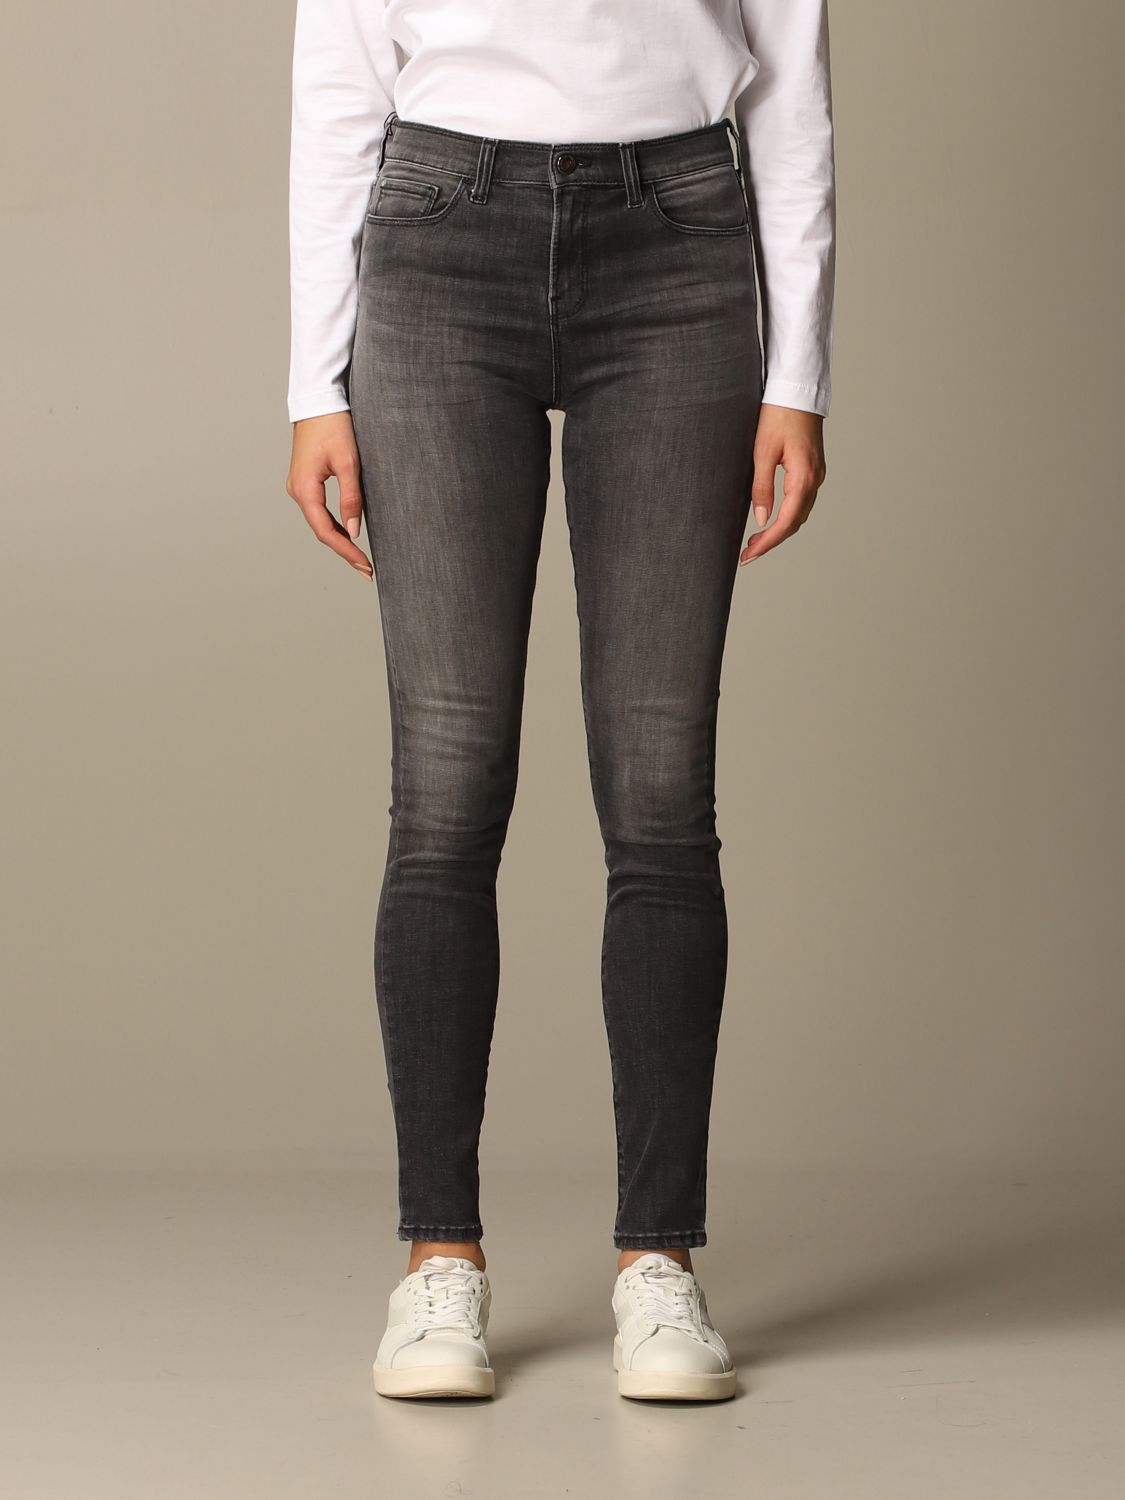 Jeans women Emporio Armani | Jeans 